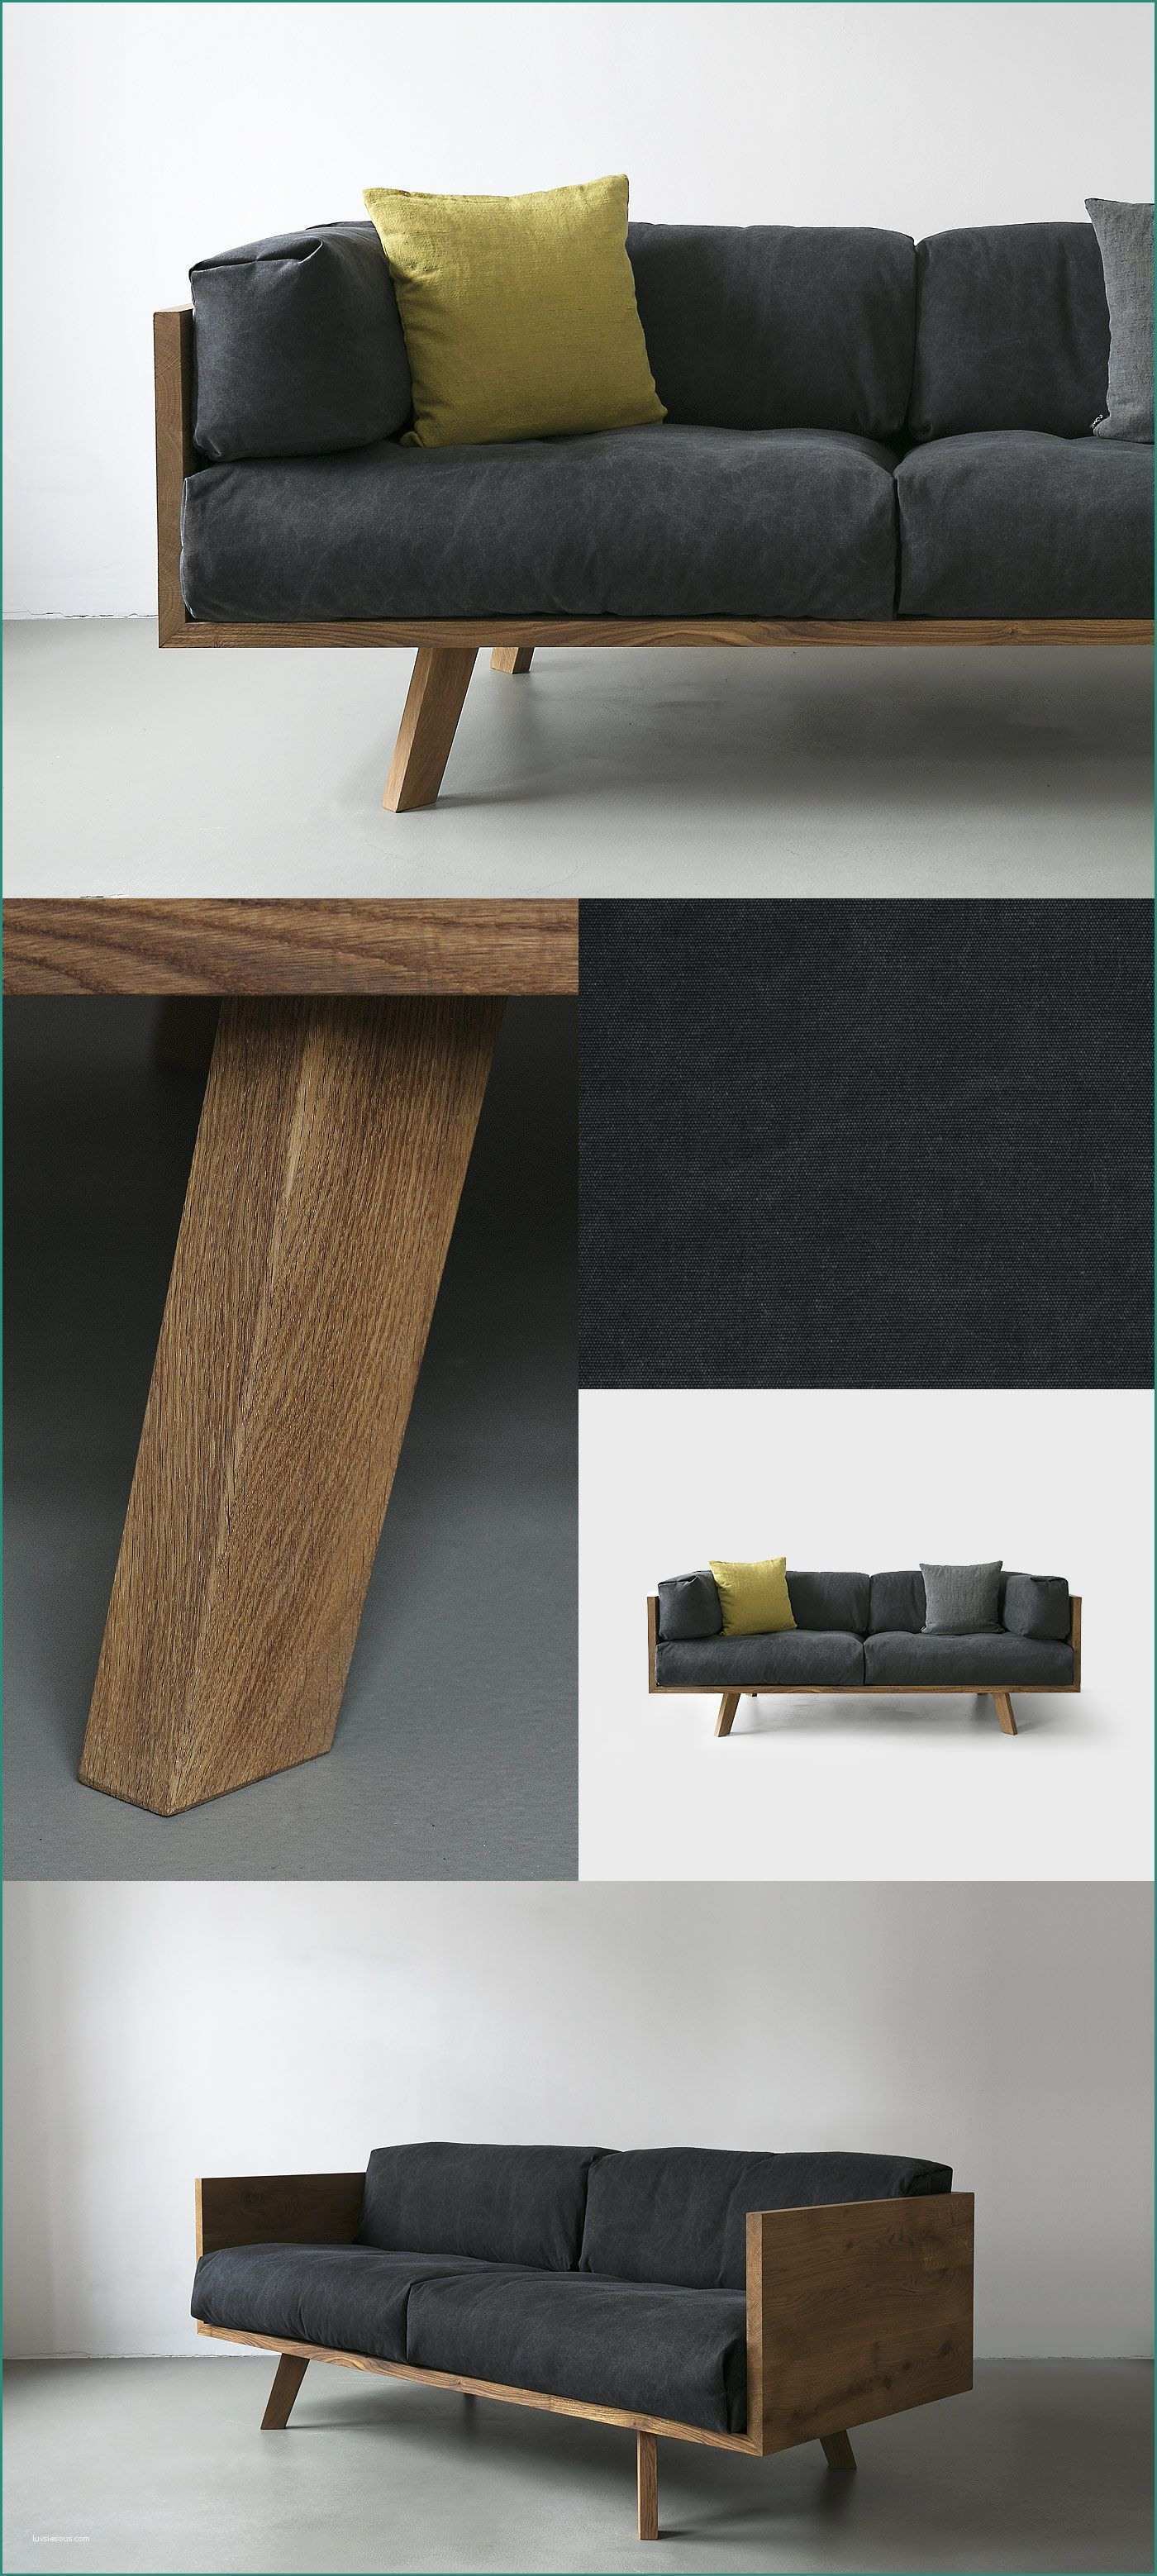 Misure Standard Divano E Nutsandwoods – Oak Linen sofa Livinglovelife Pinterest